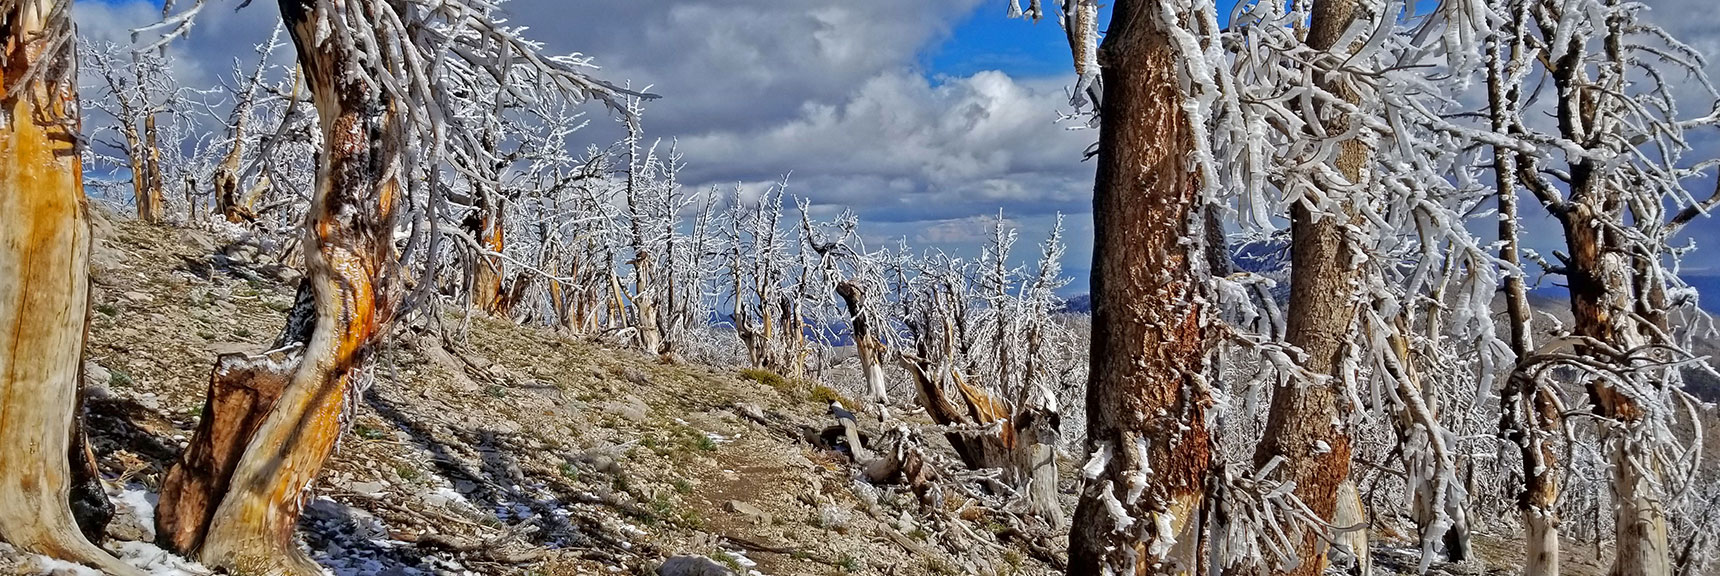 Descending Through the 2013 Burn Area | Charleston Peak Loop October Snow Dusting | Mt. Charleston Wilderness | Spring Mountains, Nevada